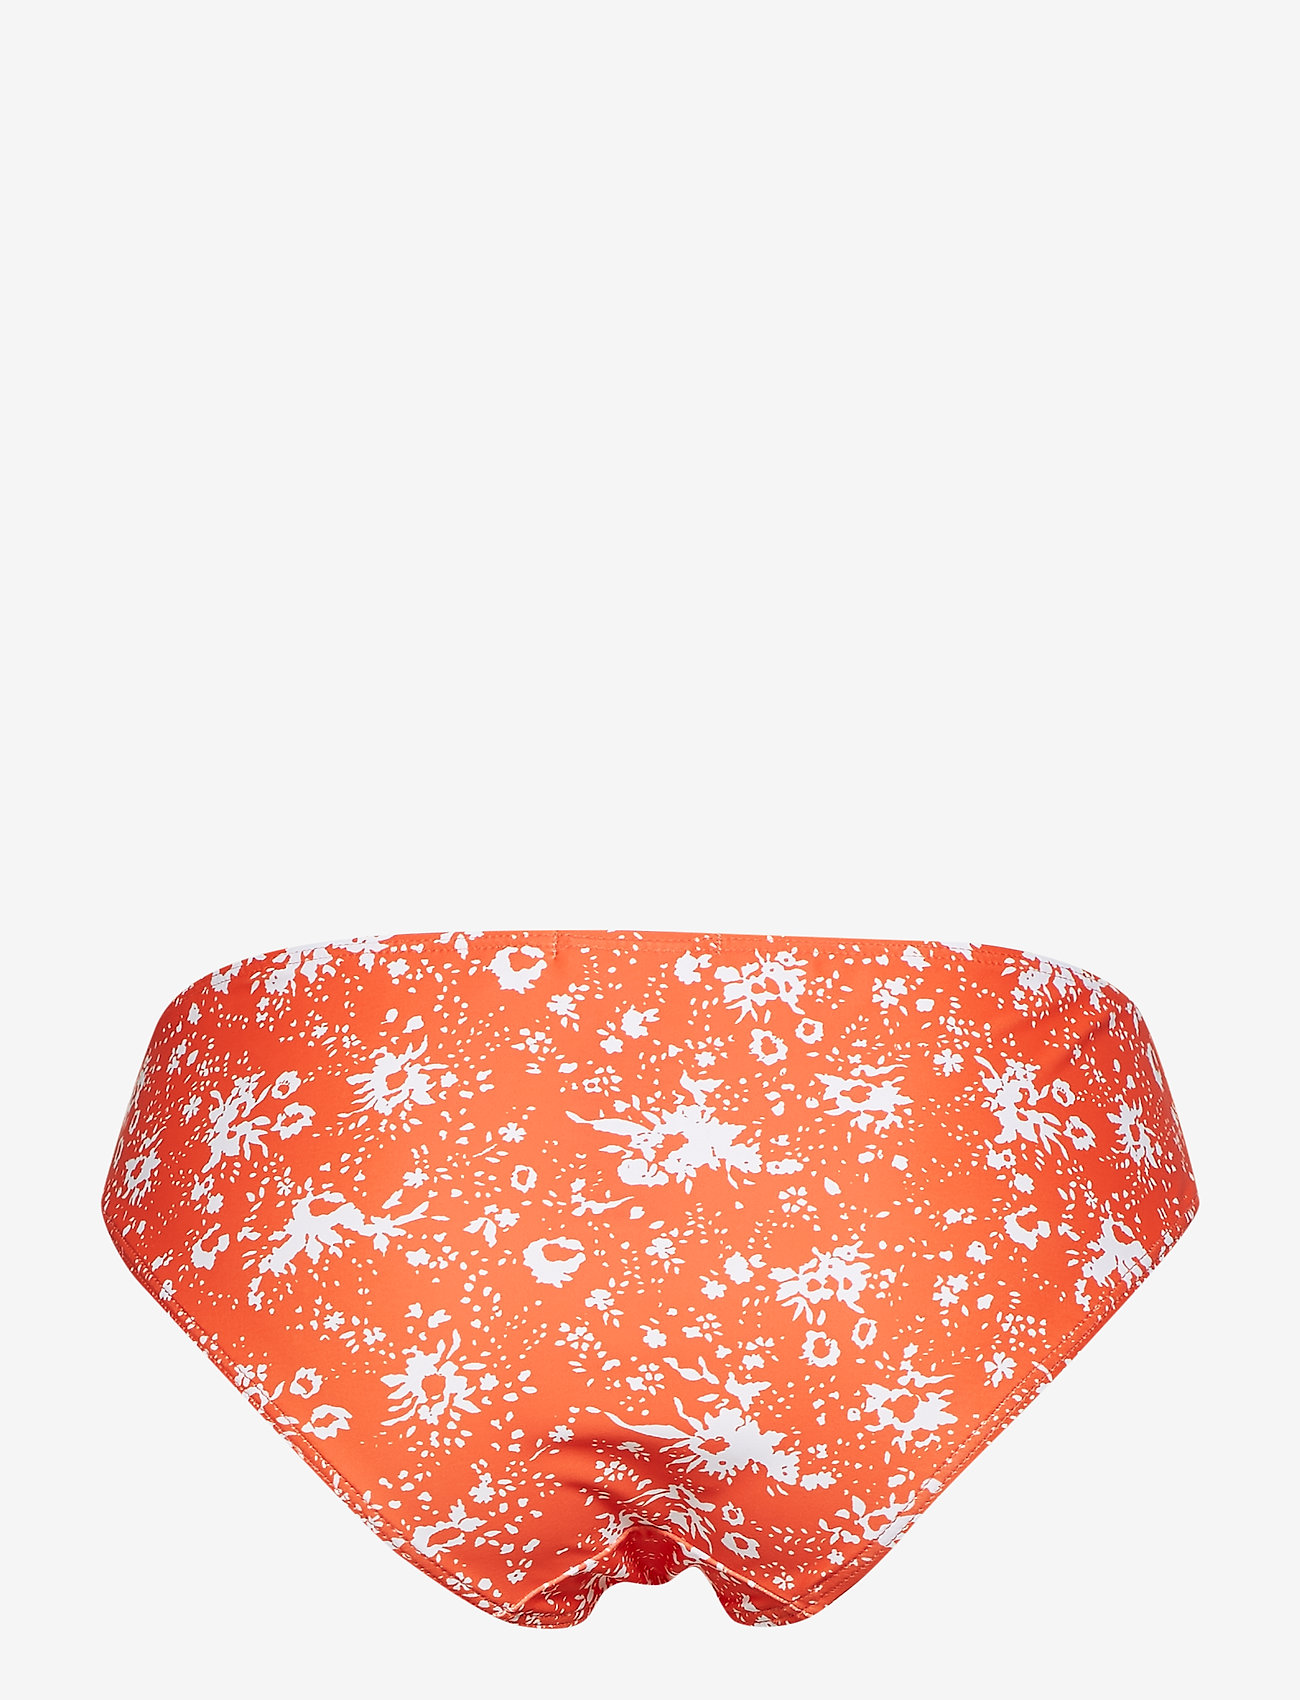 InWear - Korona Bikini Bottom - bikini briefs - blood orange drissle flower - 1